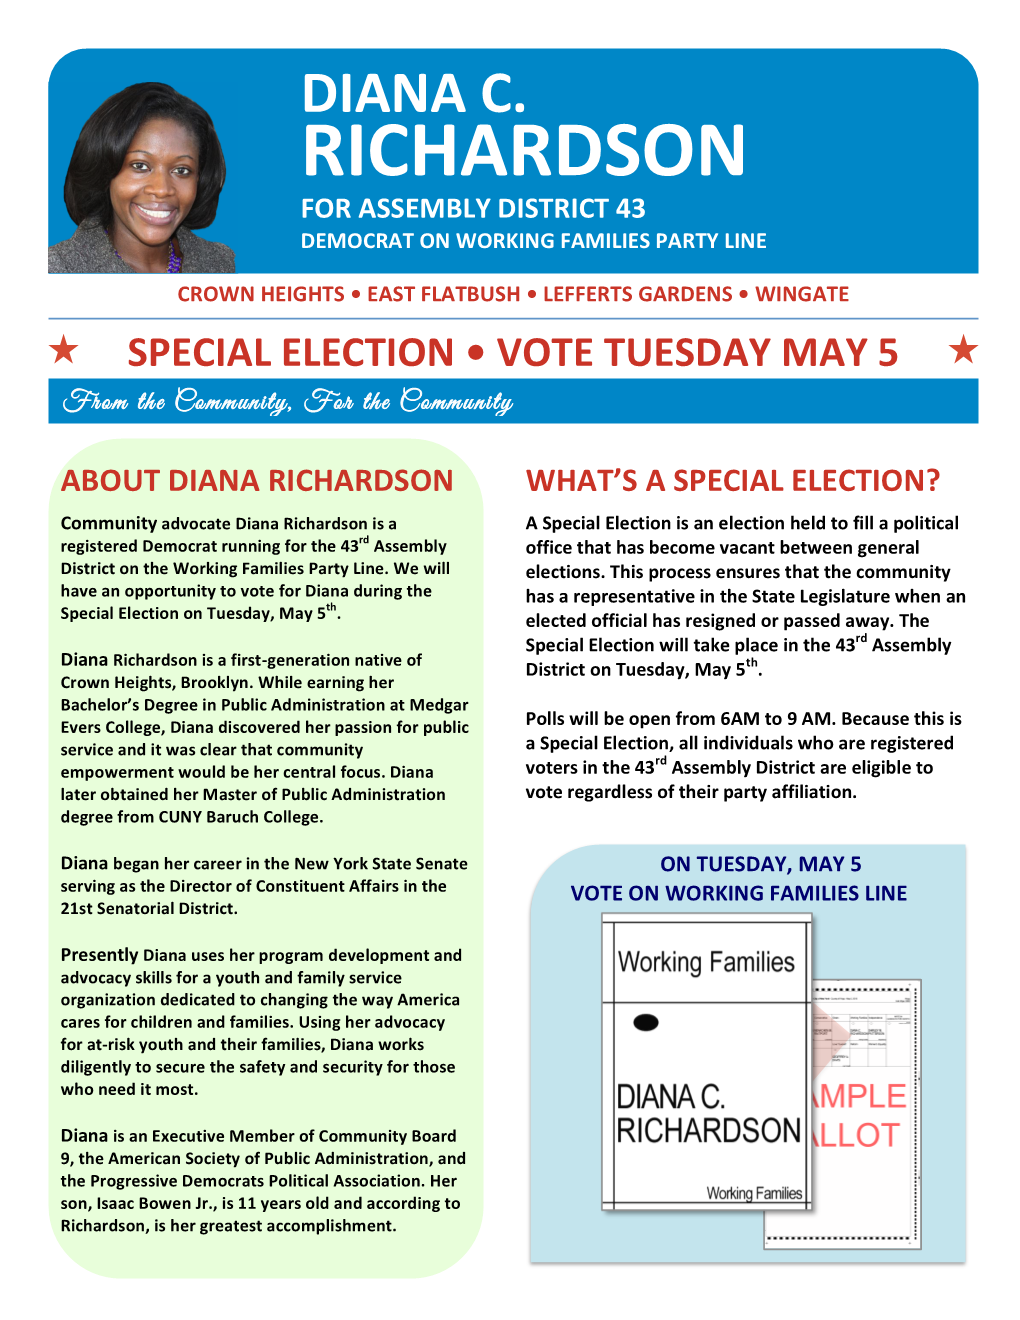 About Diana Richardson